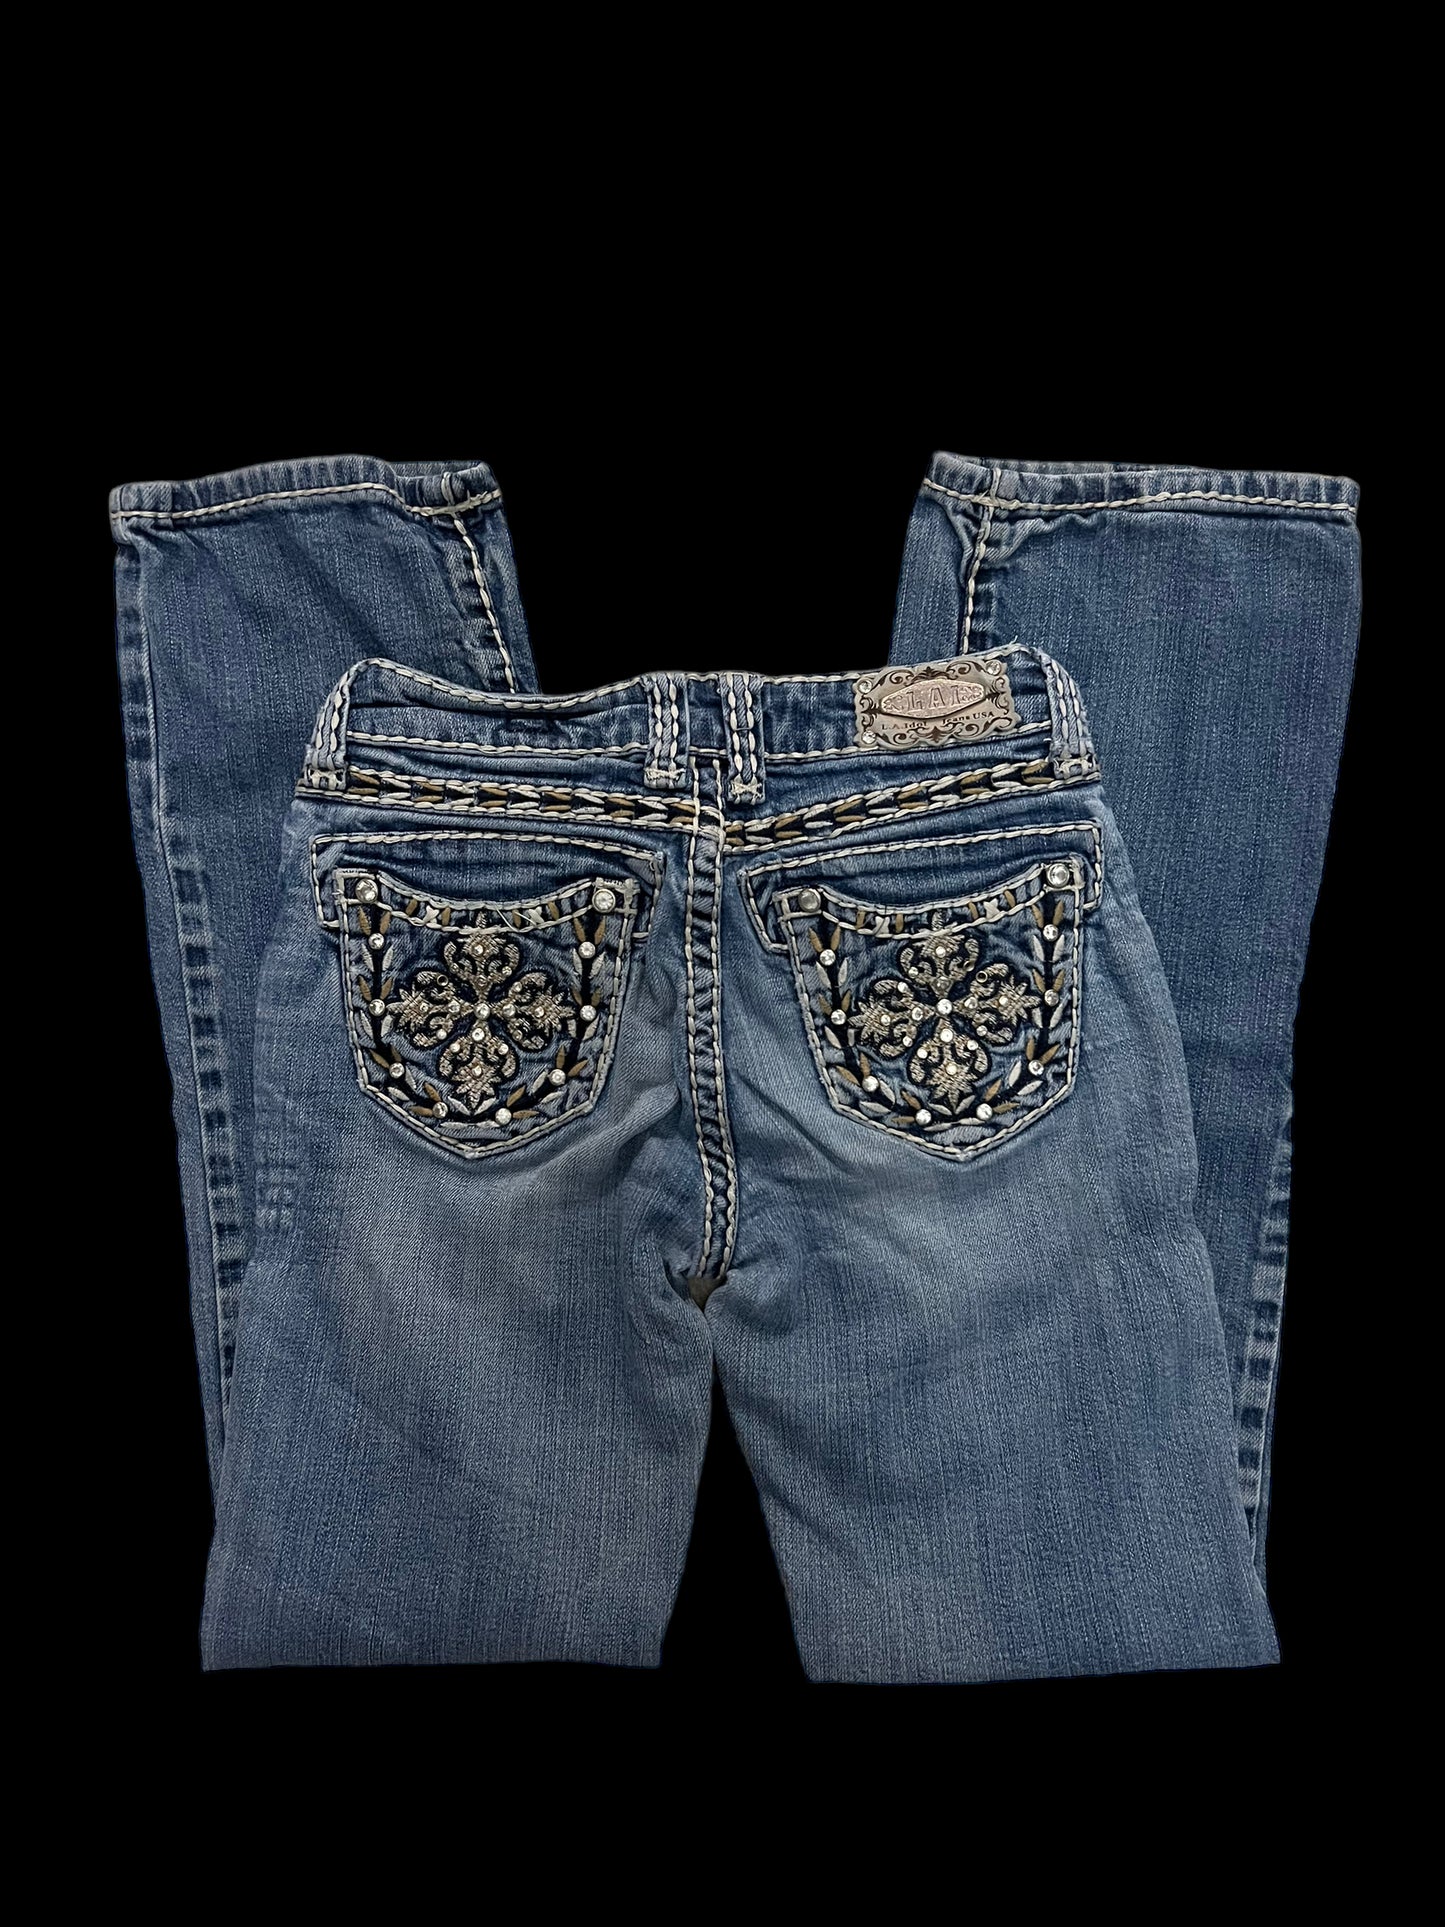 L.A. Idol embellished jeans